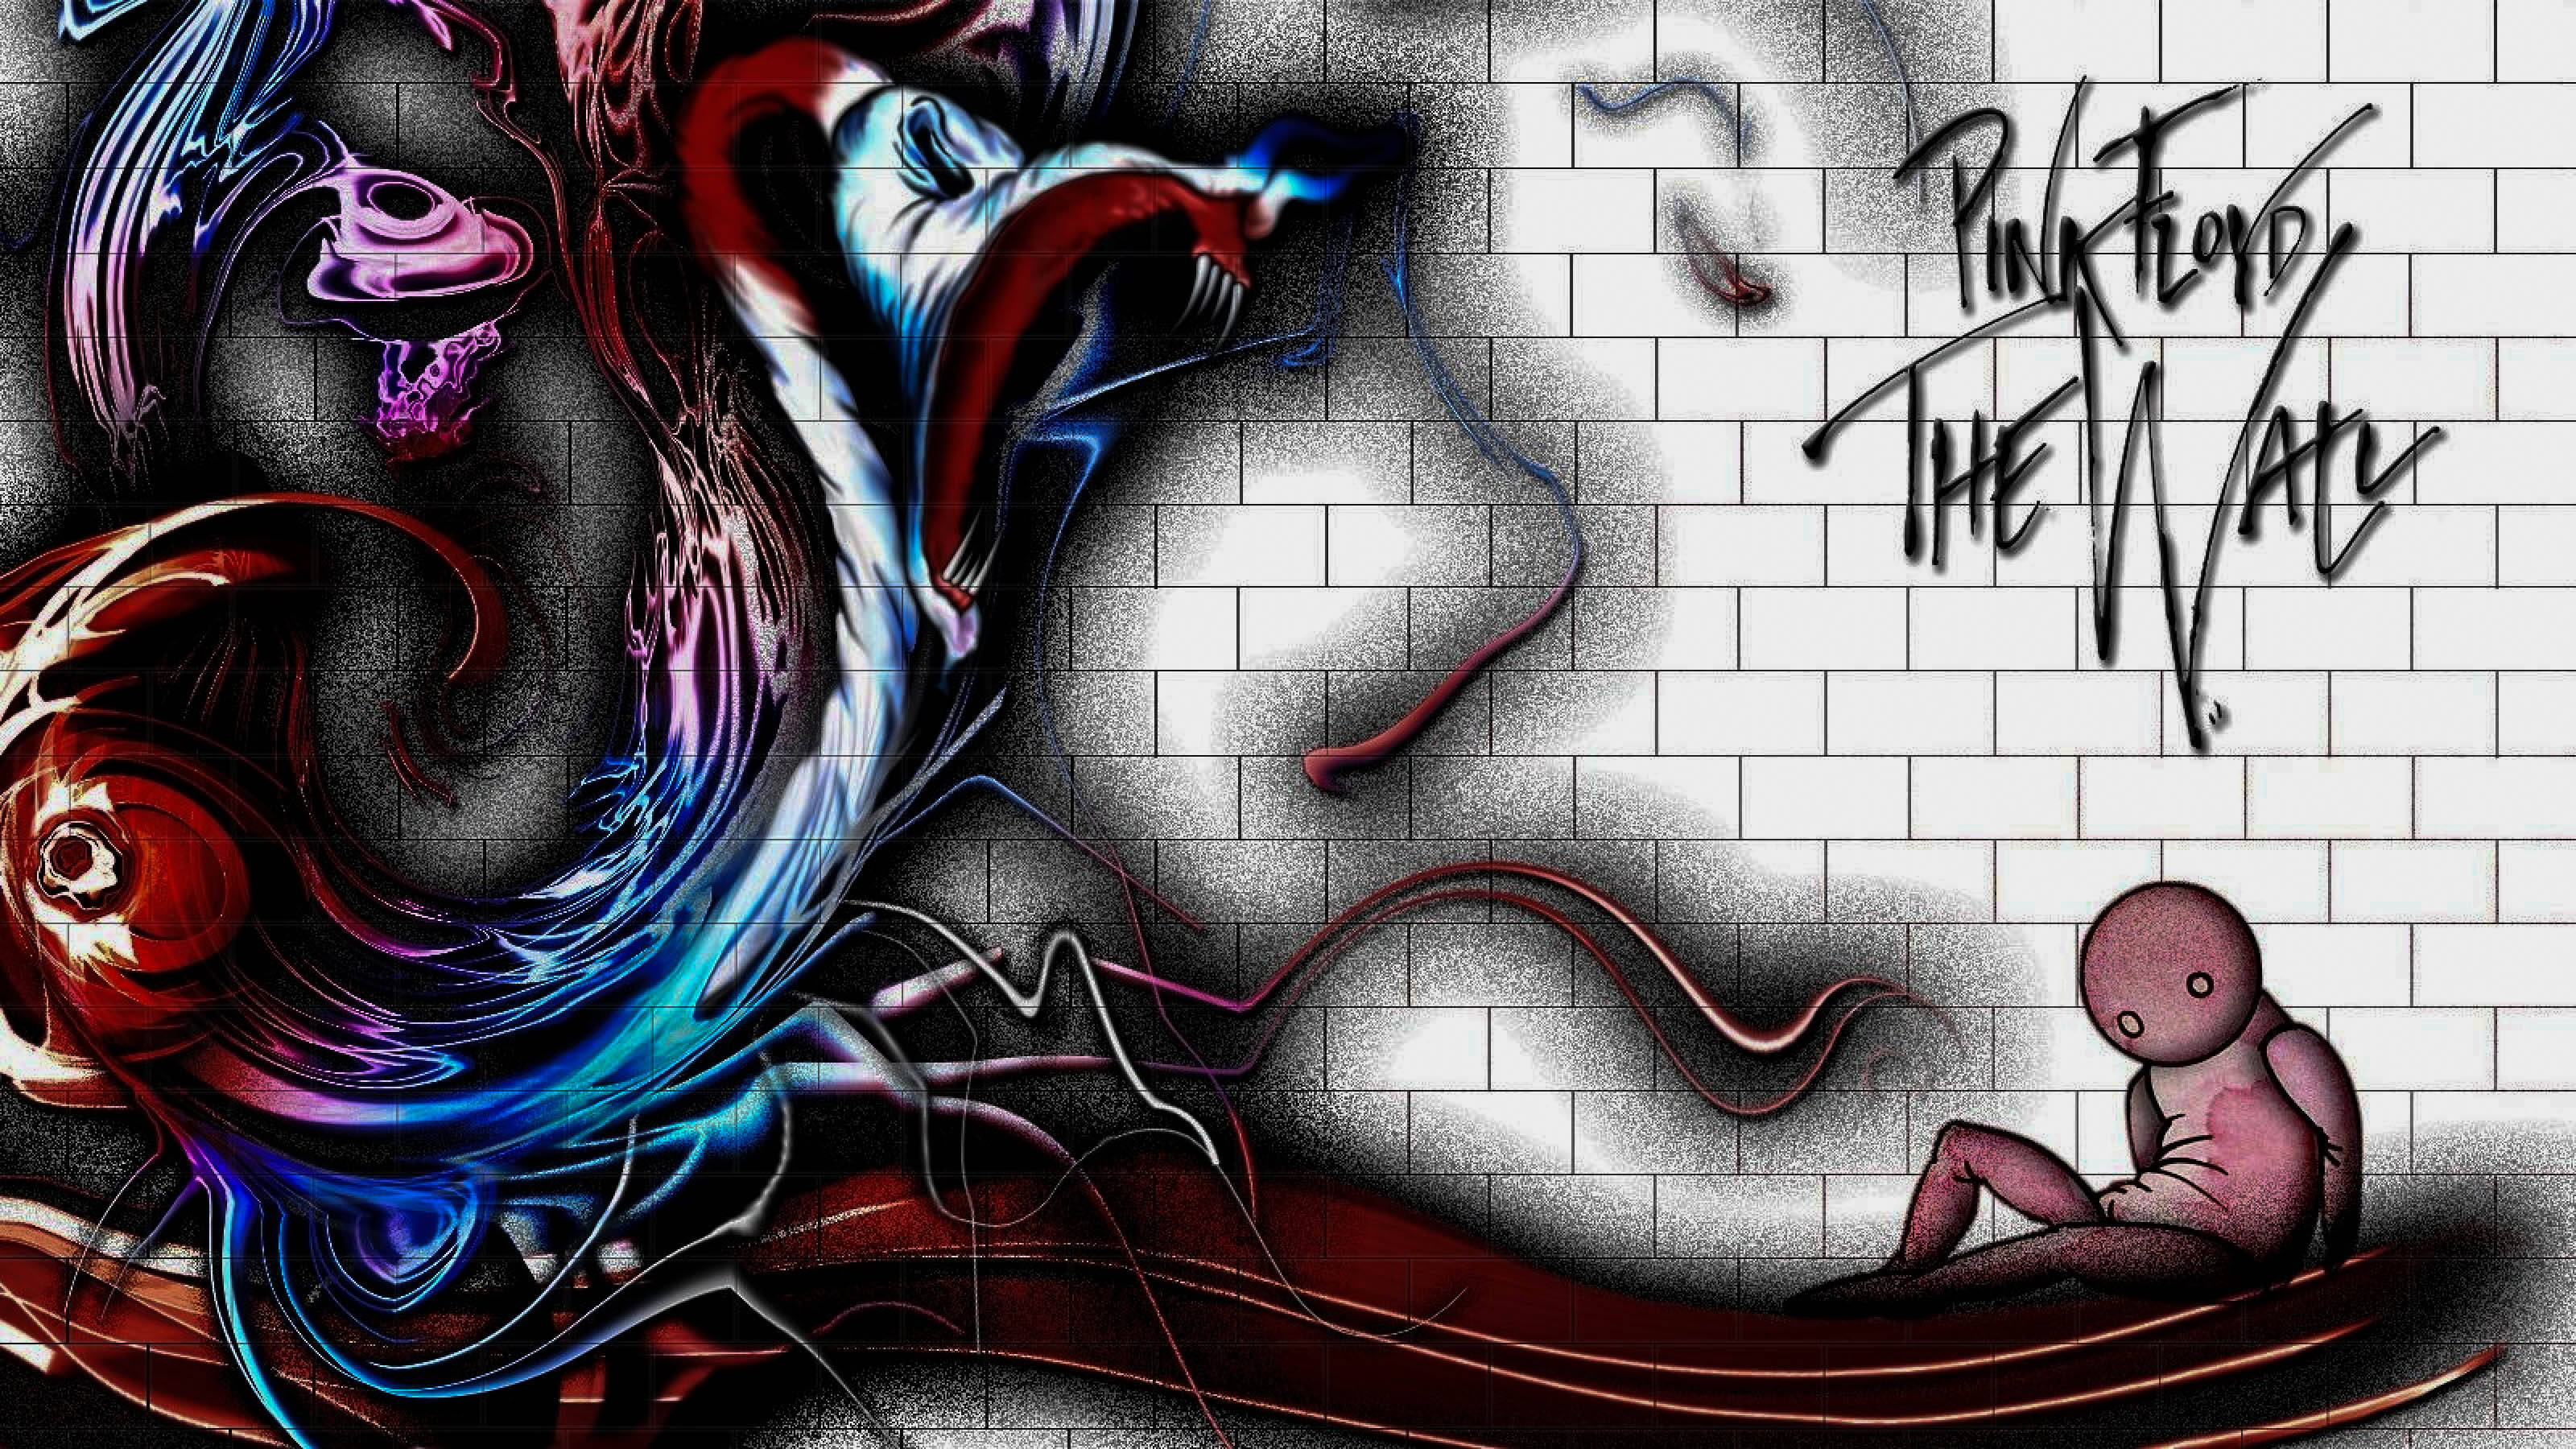 Download Pink Floyd 4k The Wall Graffiti Aesthetic Wallpaper